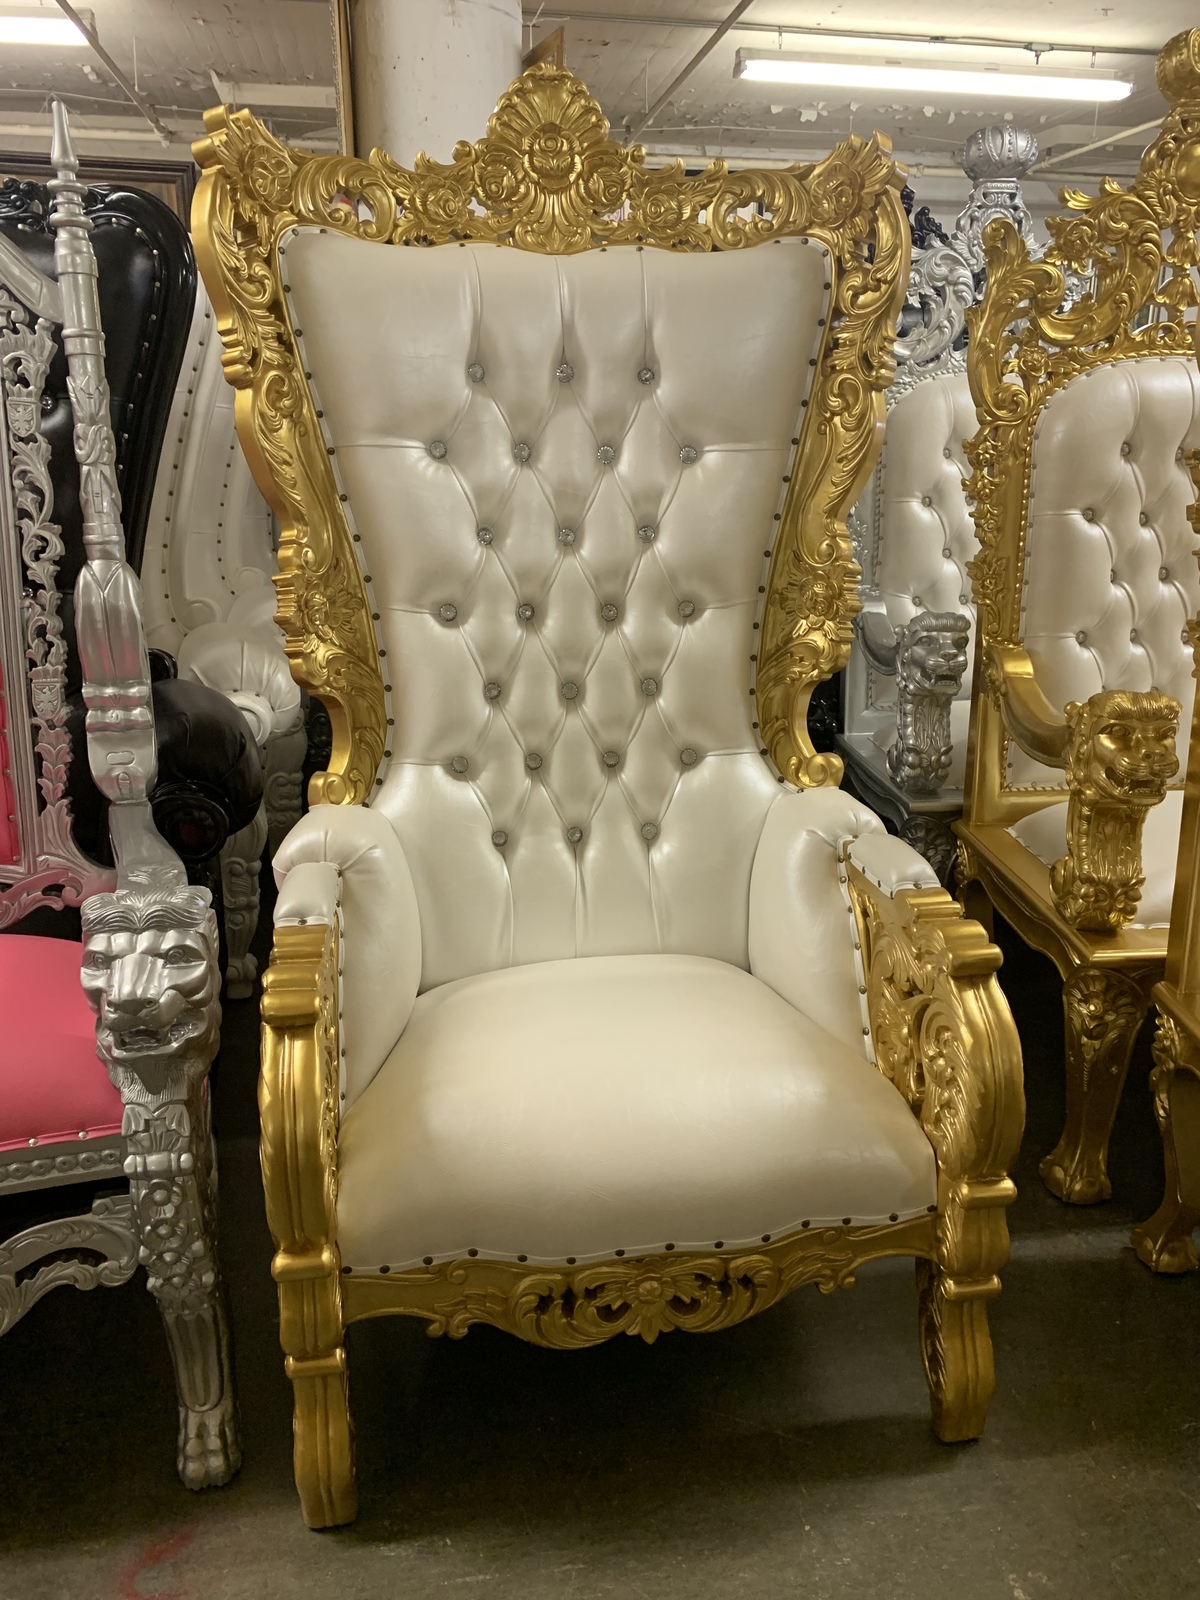 "Queen Latifah'' Royal Carved High Back Throne Chair - 72" Tall - White